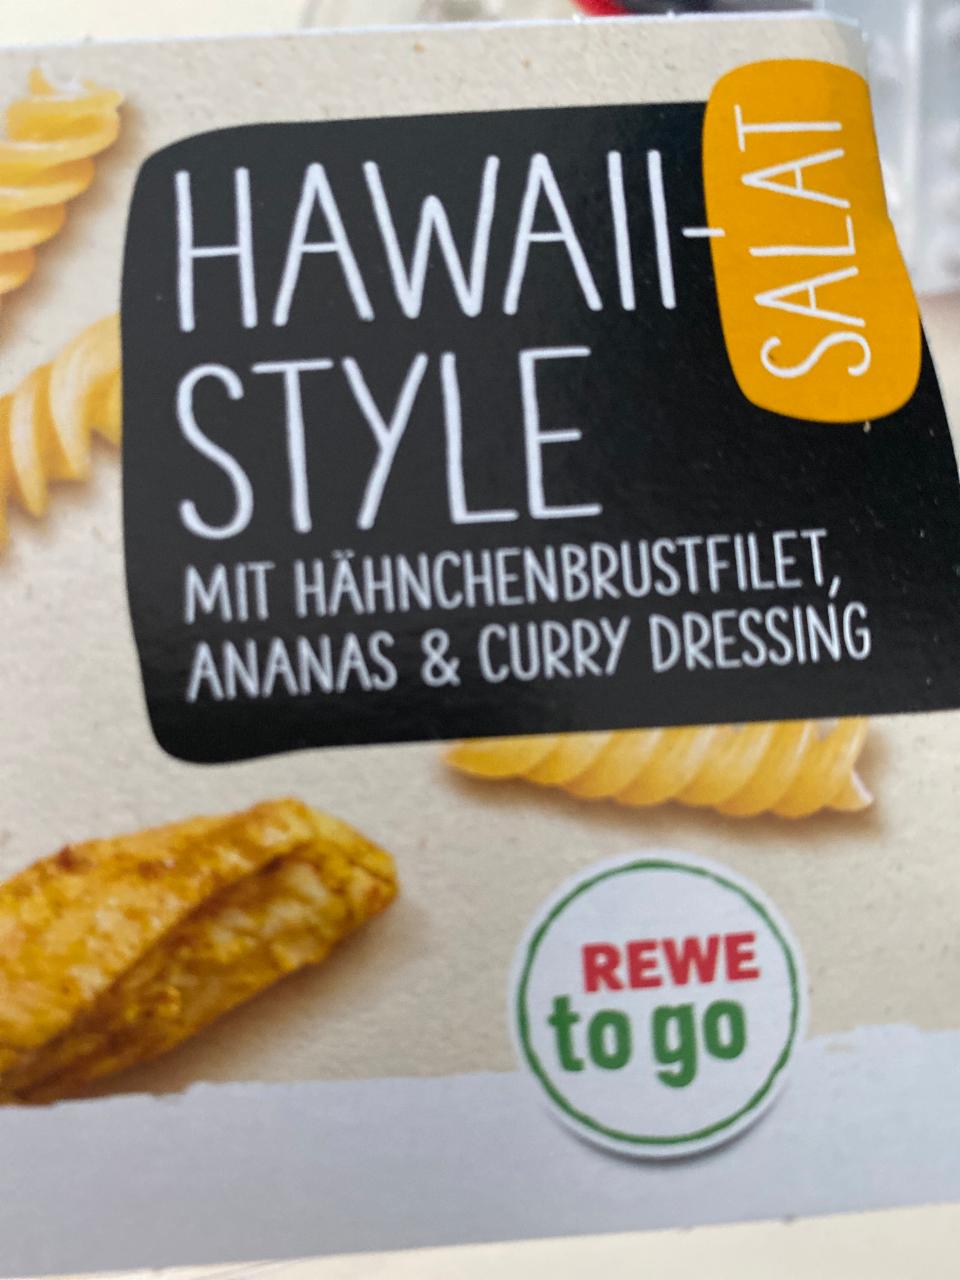 Fotografie - Hawaii style salat mit hähnchenbrustfilet, ananas & curry dressing Rewe to go